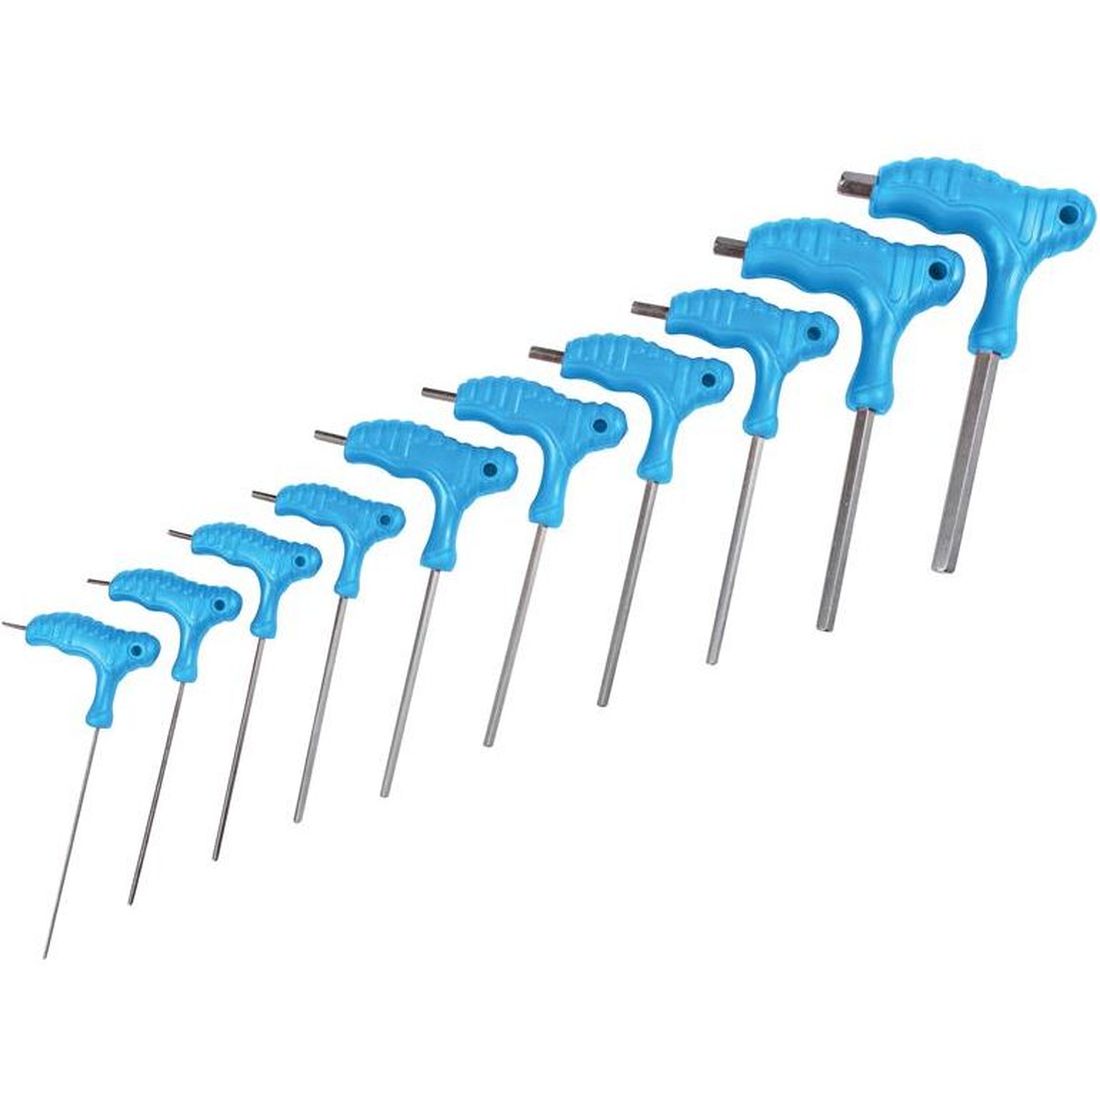 BlueSpot Tools Metric T-Handle Hex Key Set, 10 Piece (2-10mm)                                  